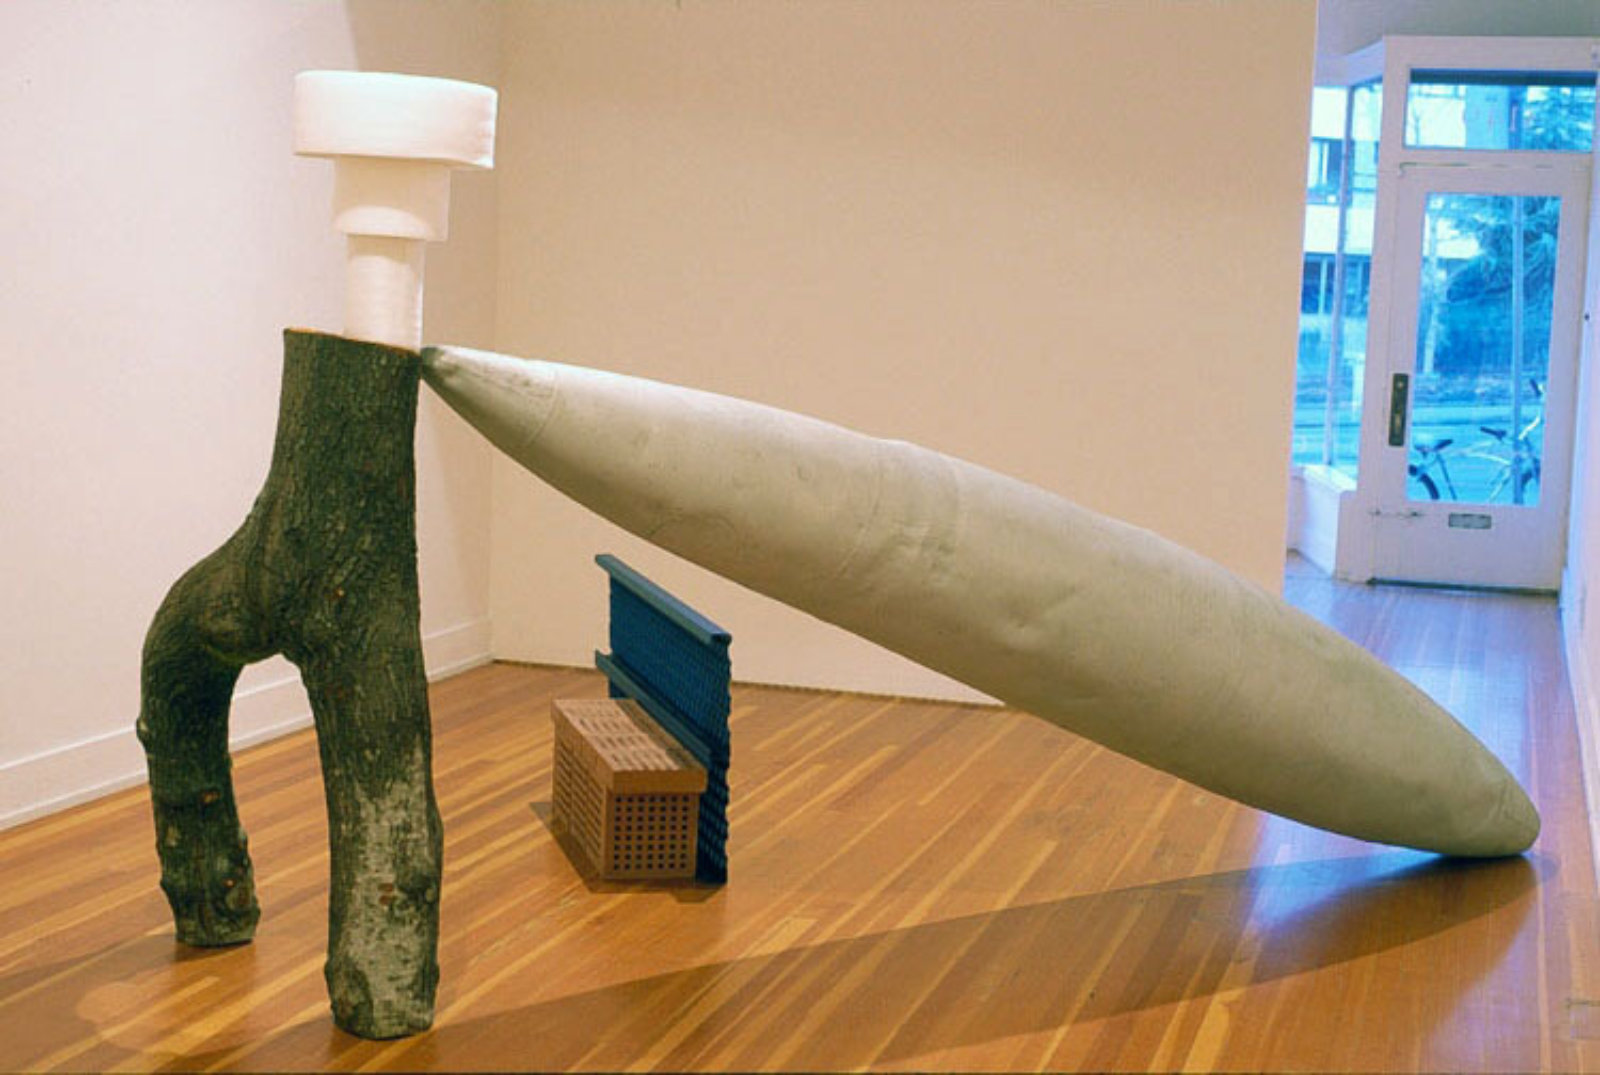 Jerry Pethick, Trough, 2001, wood, plastic, clay, anodized aluminum, sandblasted aluminum, 70 x 134 x 120 in. (178 x 340 x 305 cm)